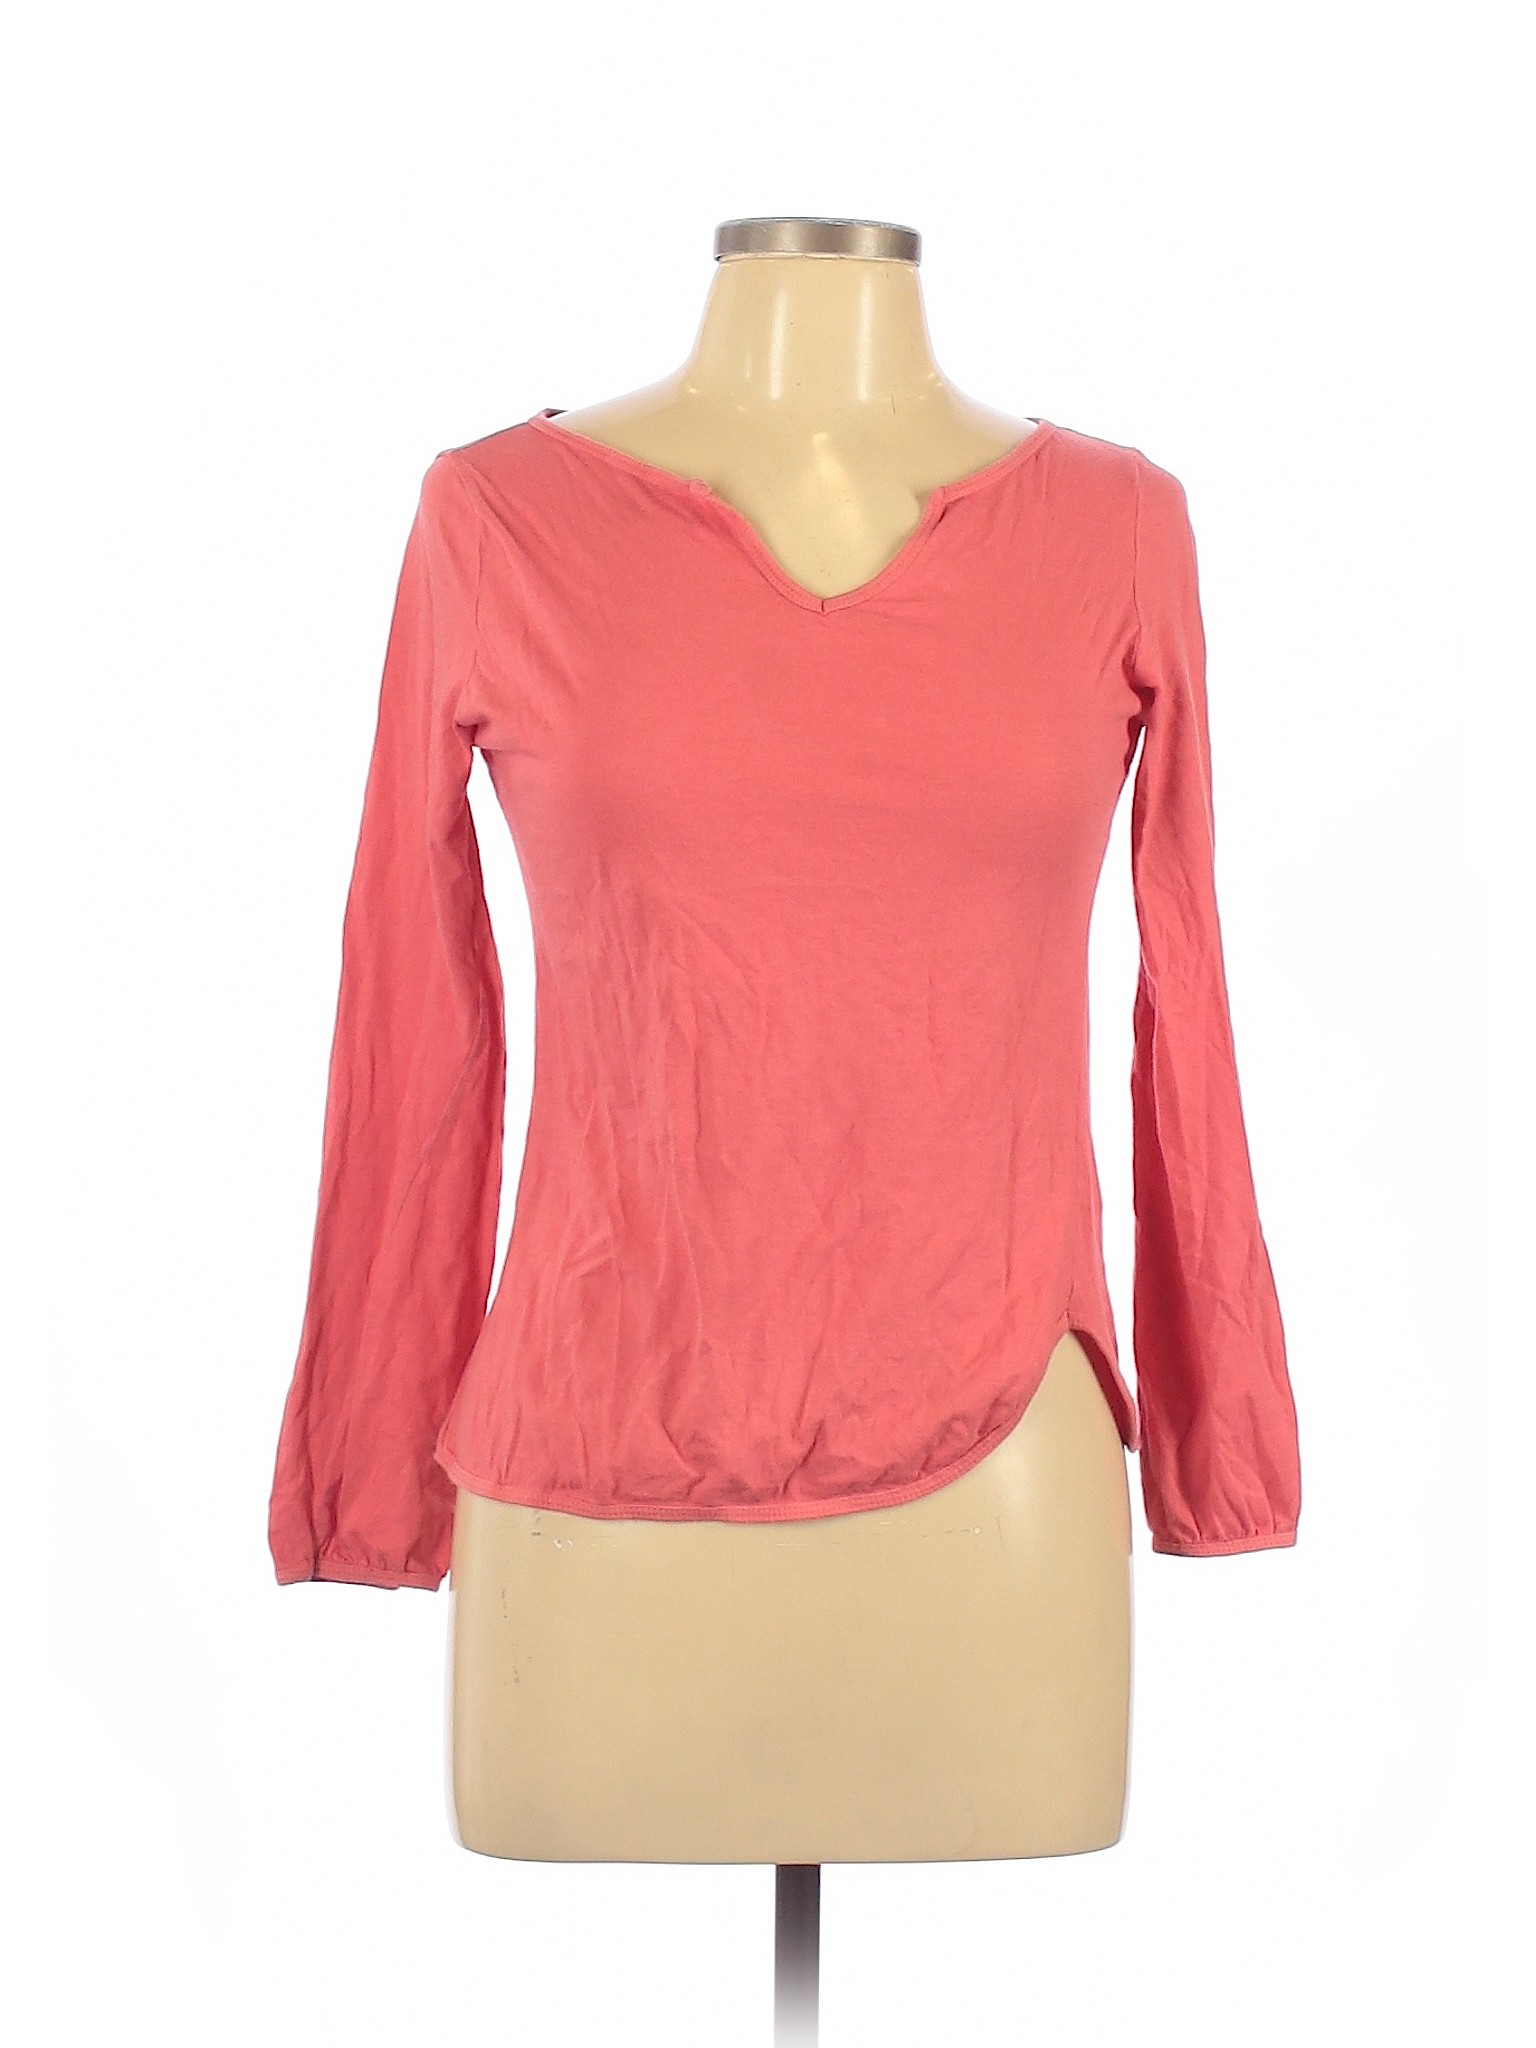 Zara Basic Women Pink Long Sleeve T-Shirt L | eBay